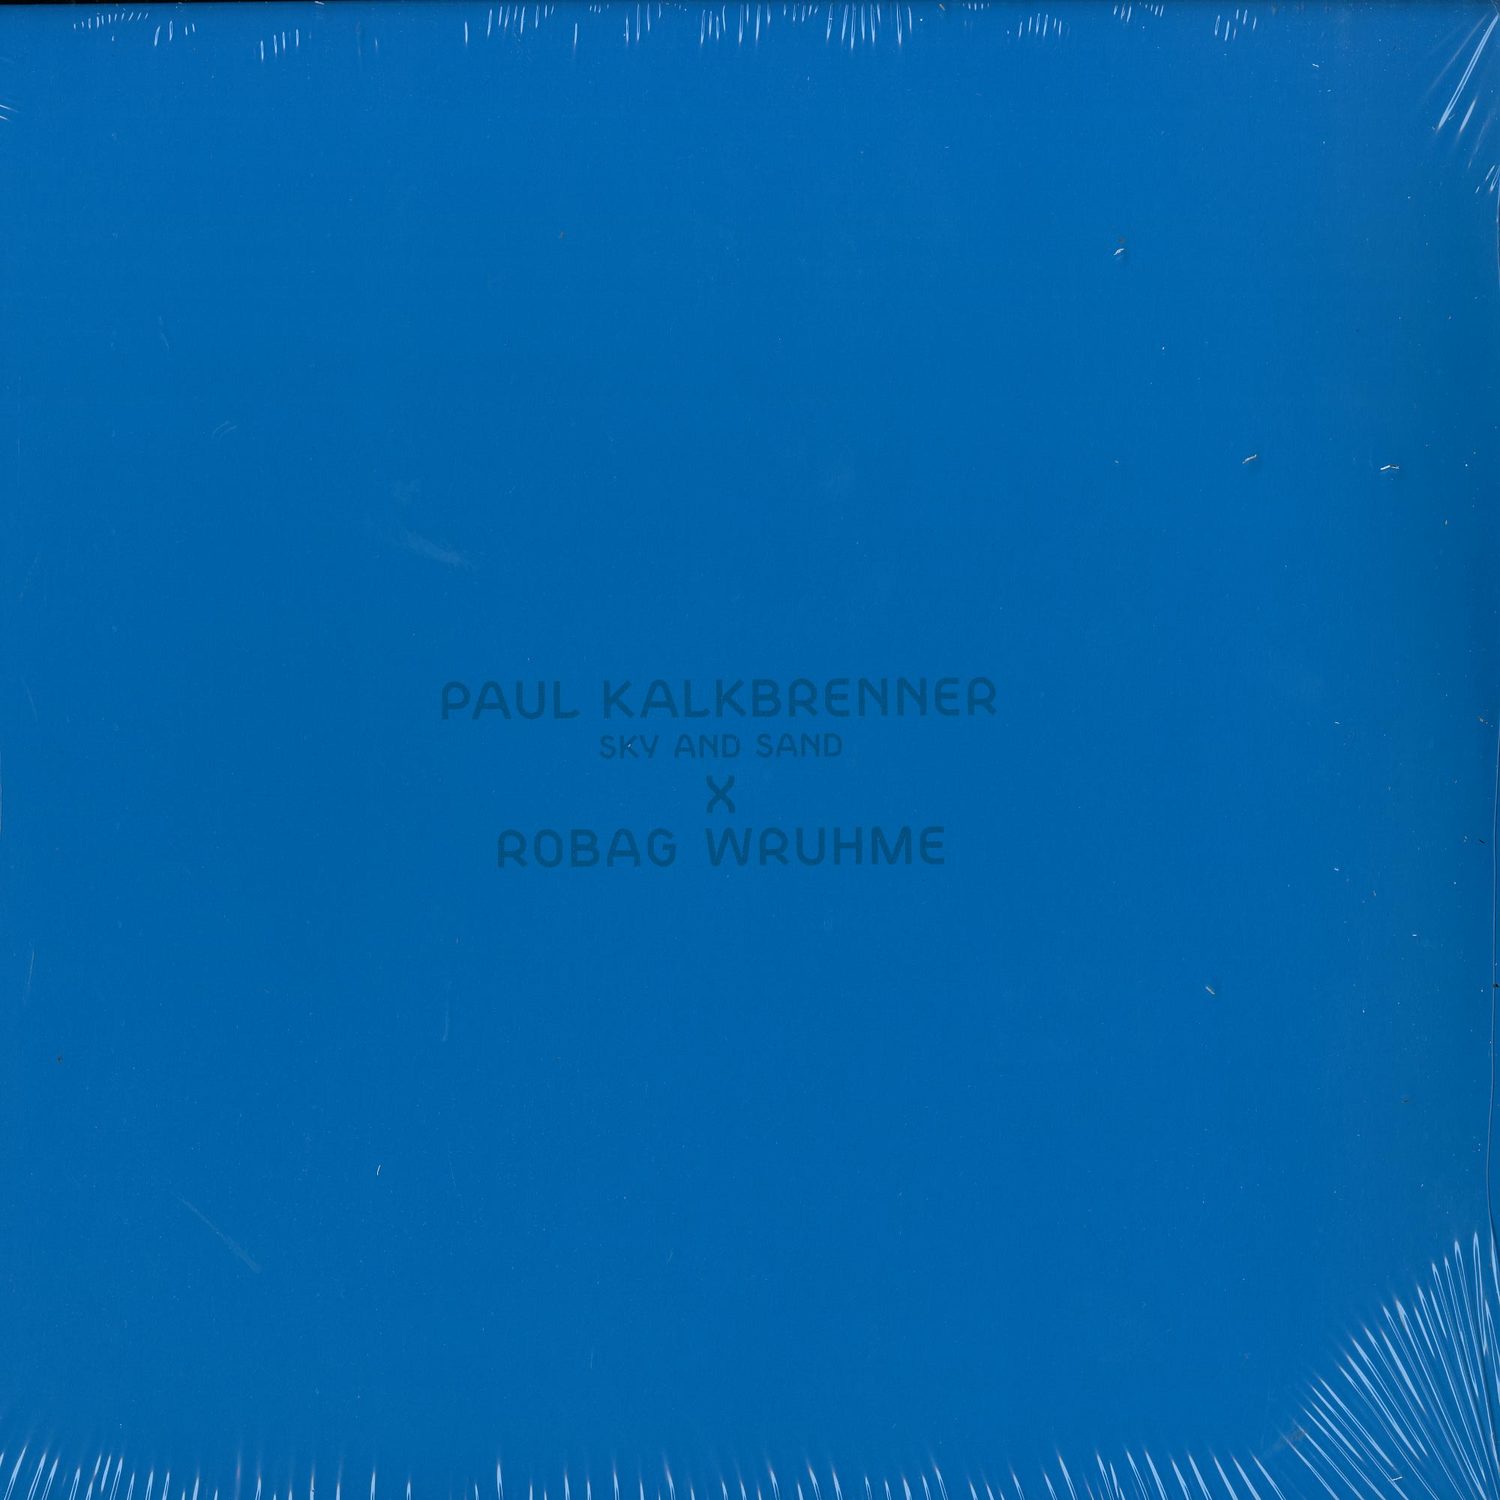 Paul Kalkbrenner - SKY AND SAND 